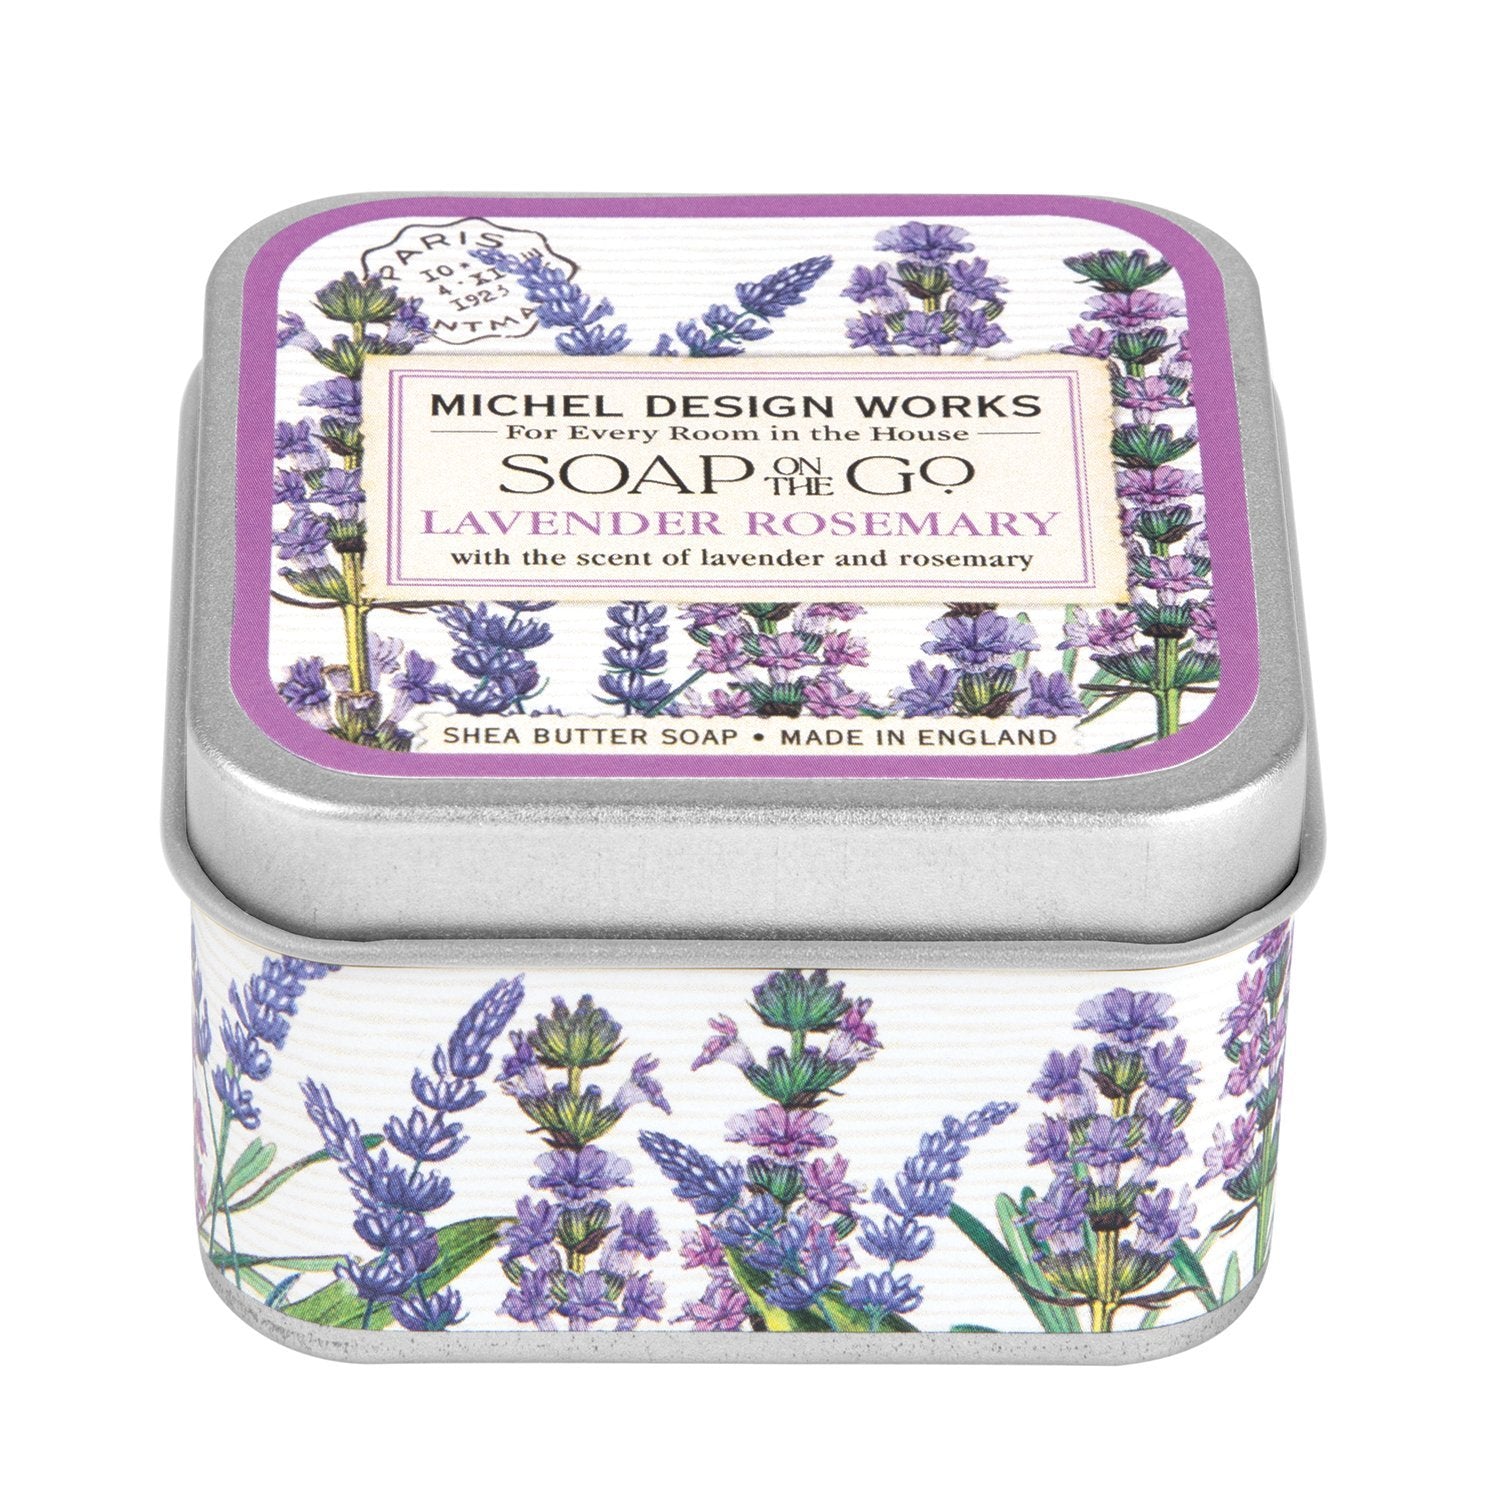 Michel Design Works Lavender Rosemary Soap on the Go